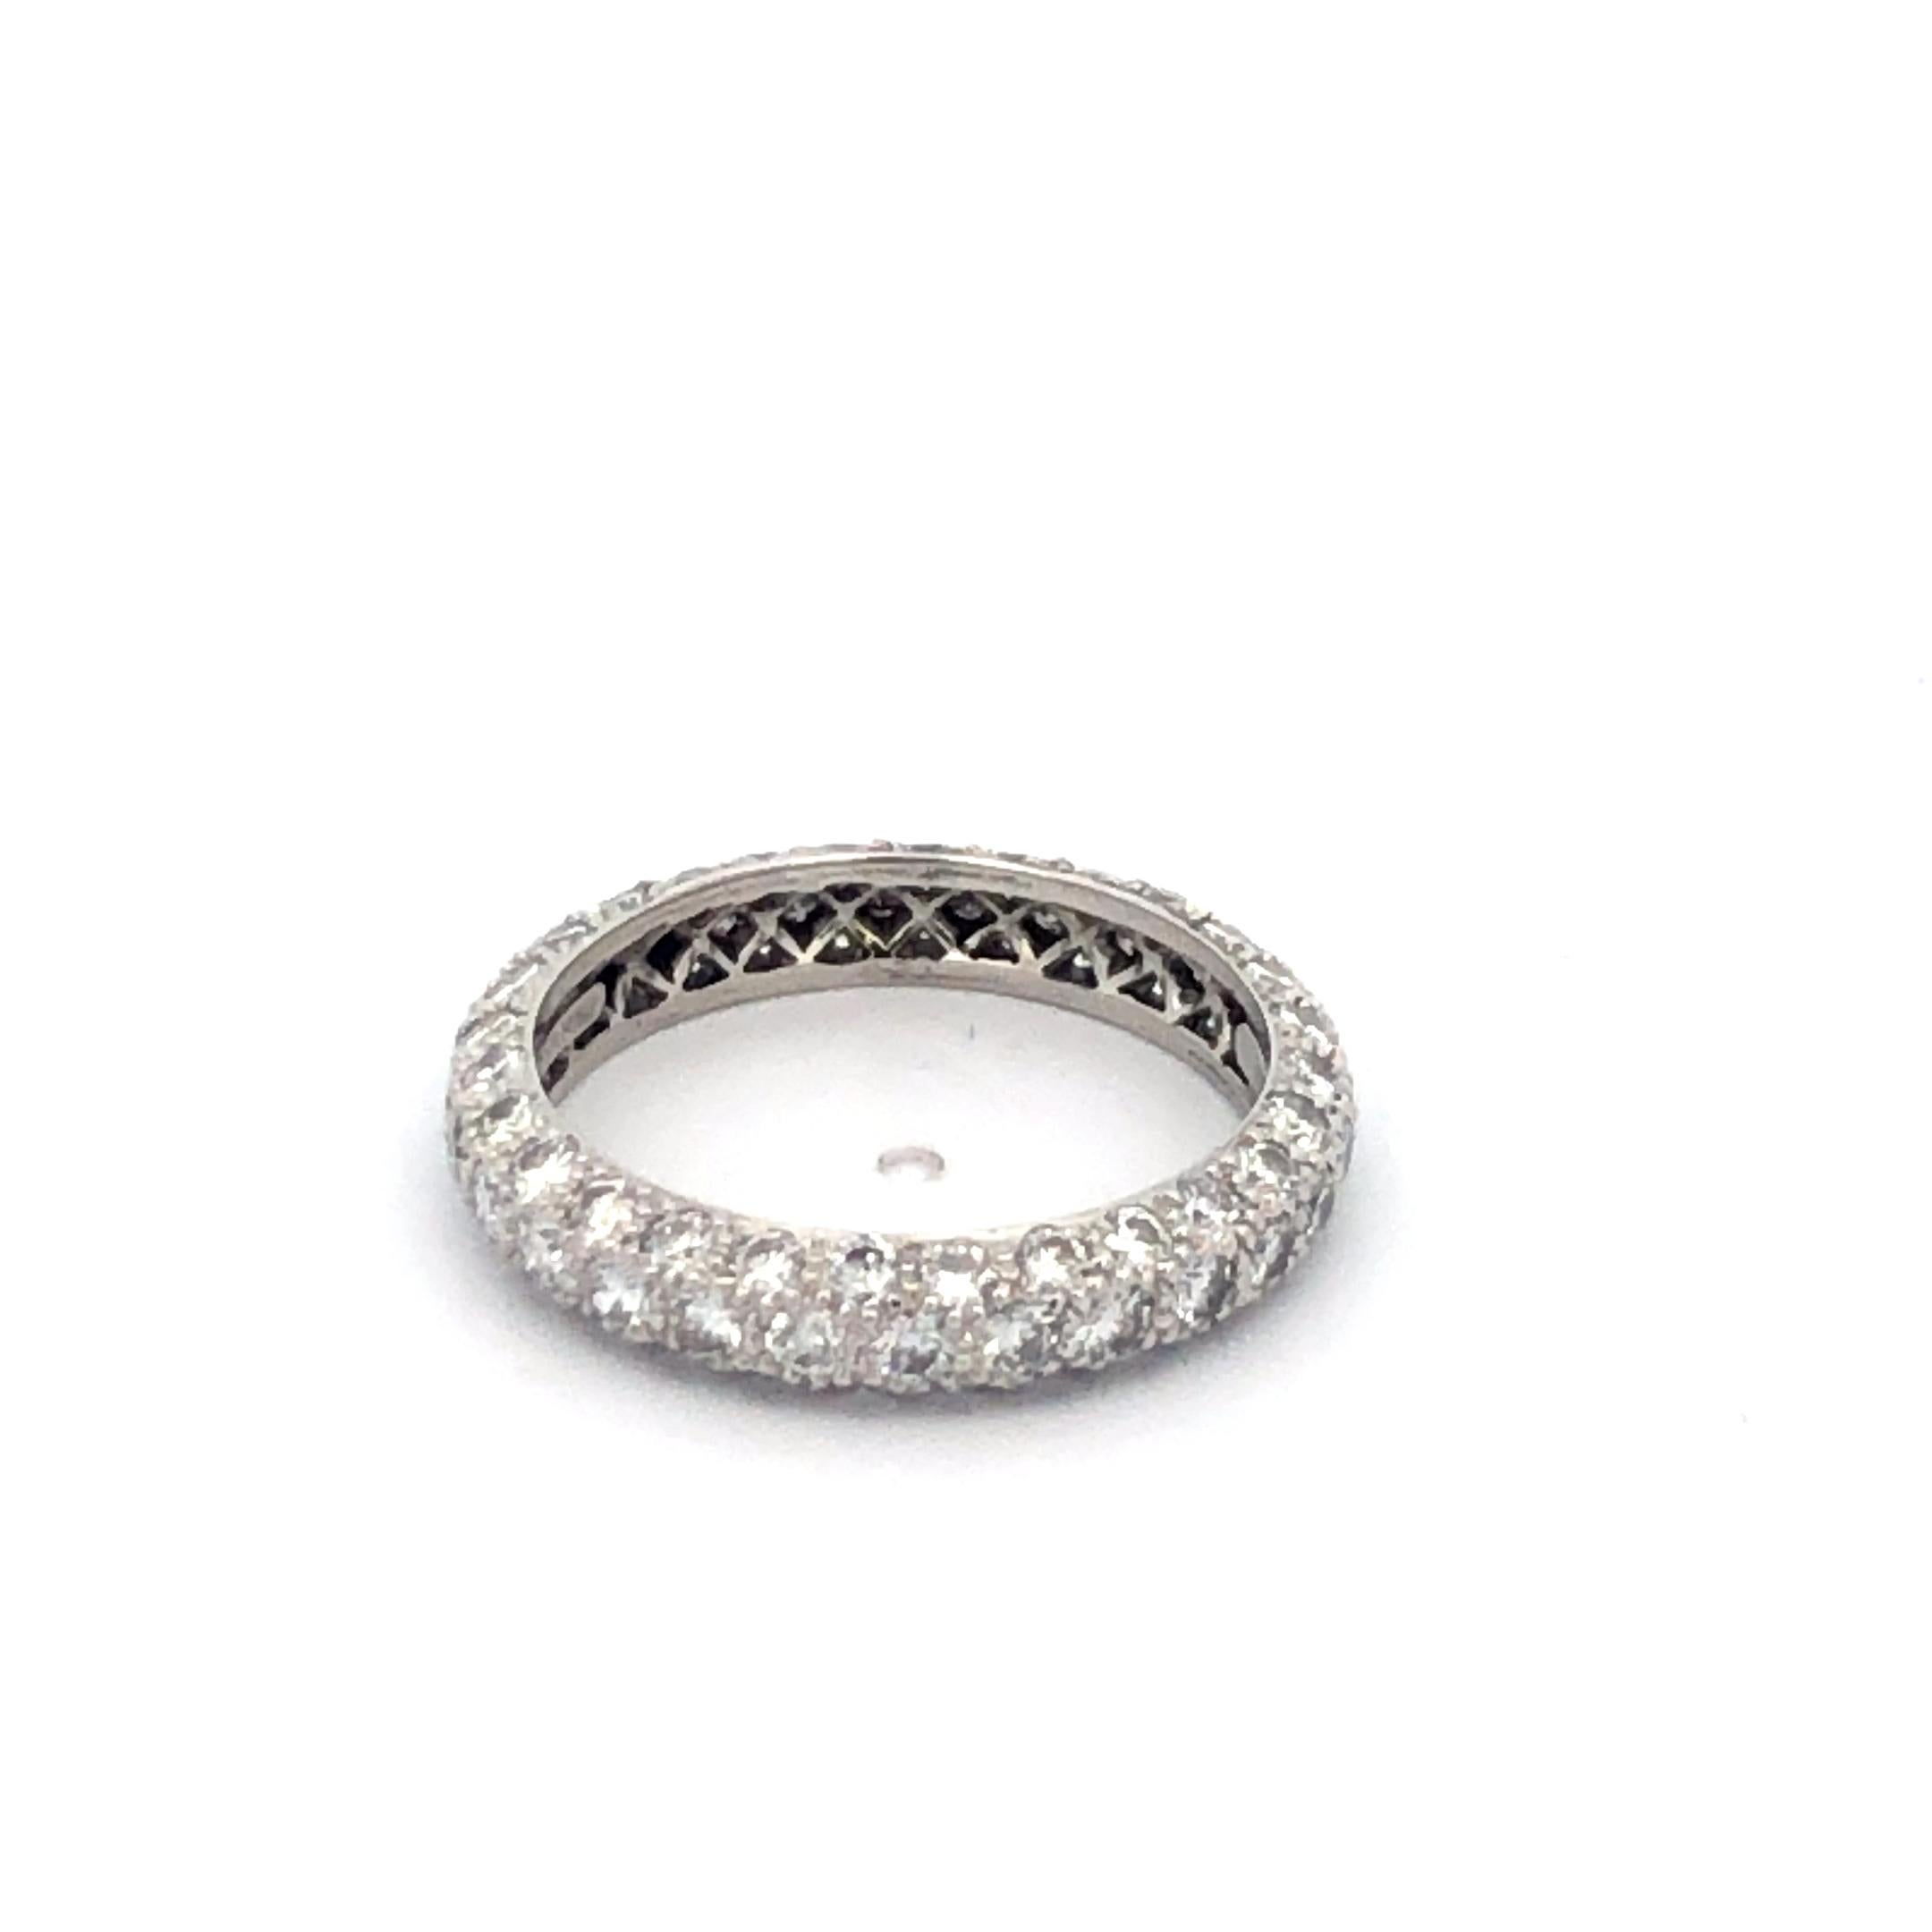 Tiffany & Co. Etoile 1.80ctw Diamond Ring Platinum Size 6 1/2
3.75mm
3.5 Grams